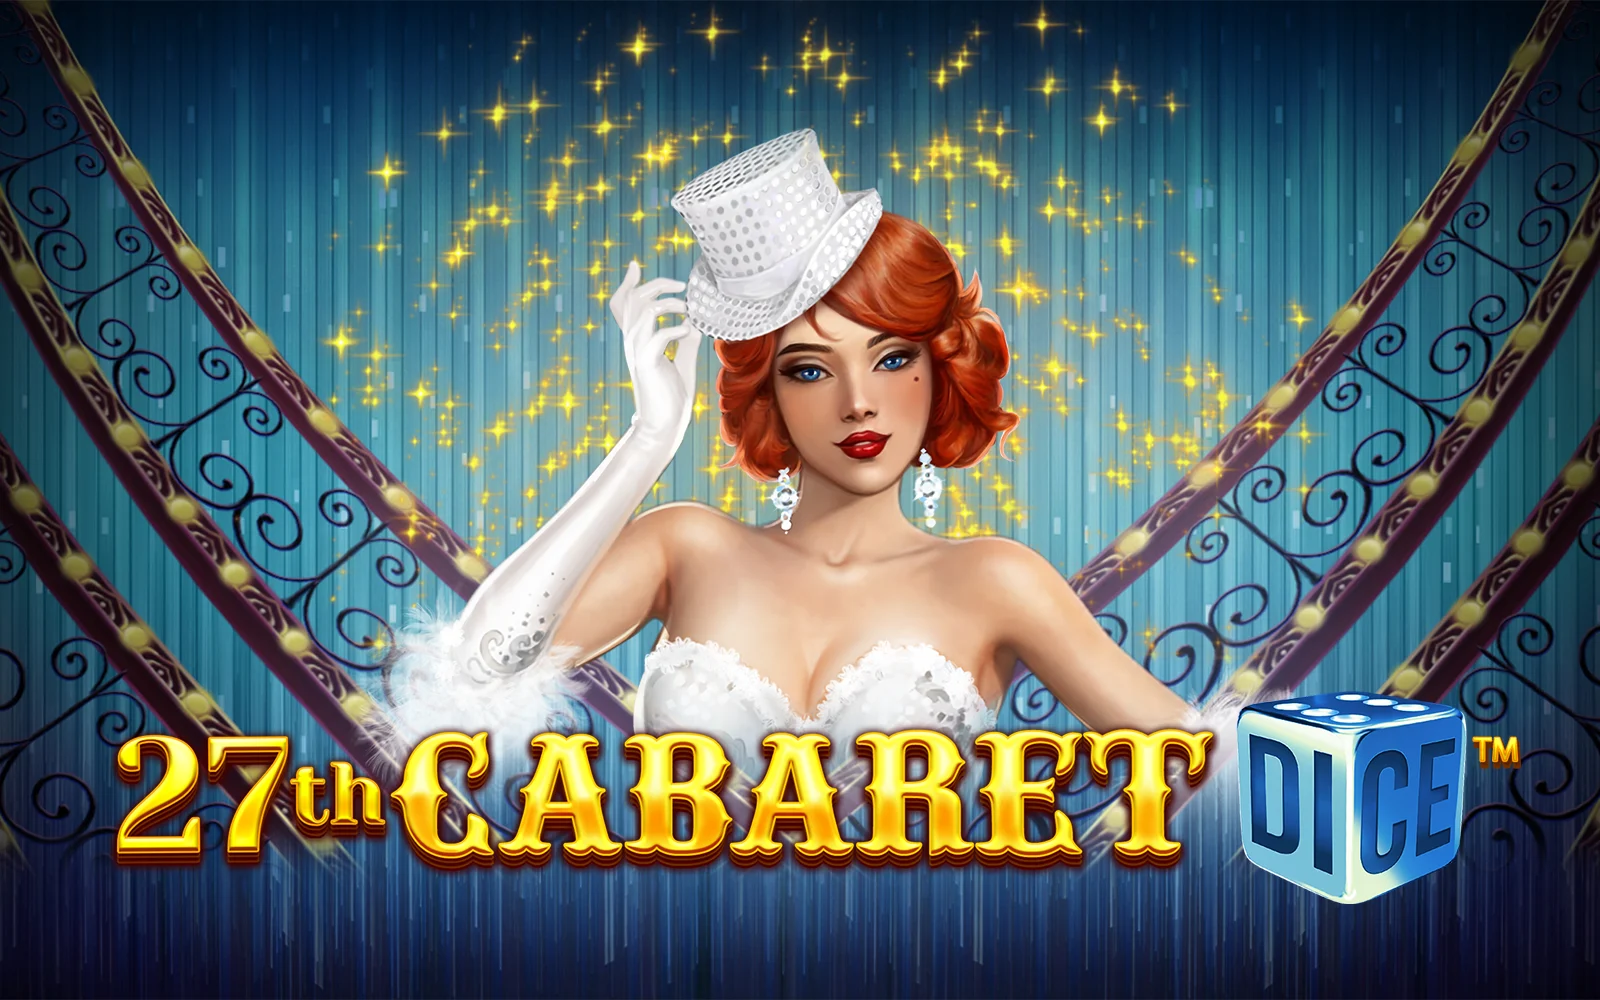 Speel 27th Cabaret Dice op Starcasino.be online casino